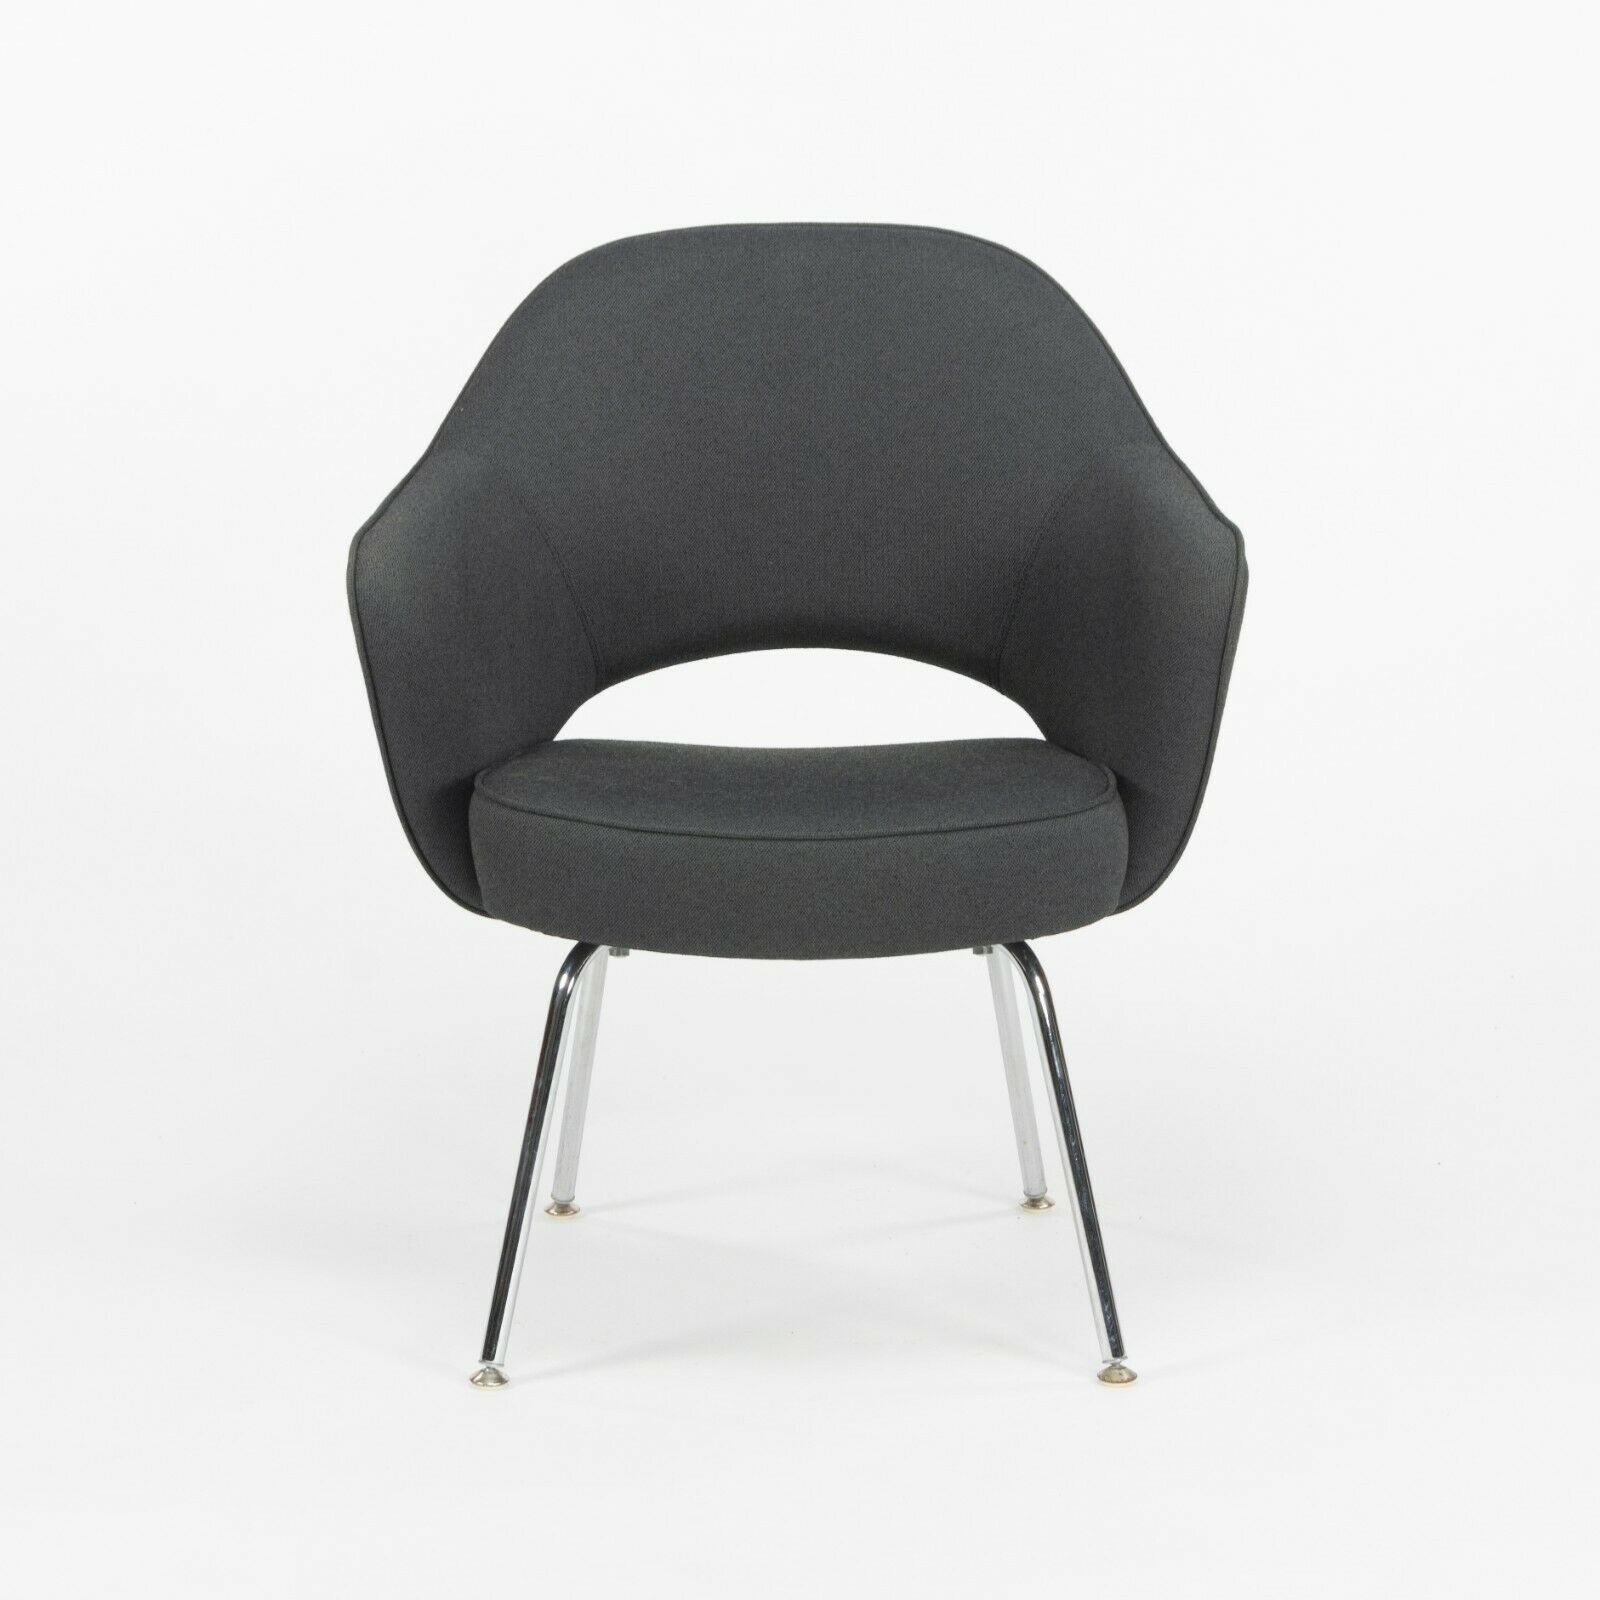 SOLD Eero Saarinen for Knoll 2020 Executive Armchair with Grey Fabric and Chrome Legs